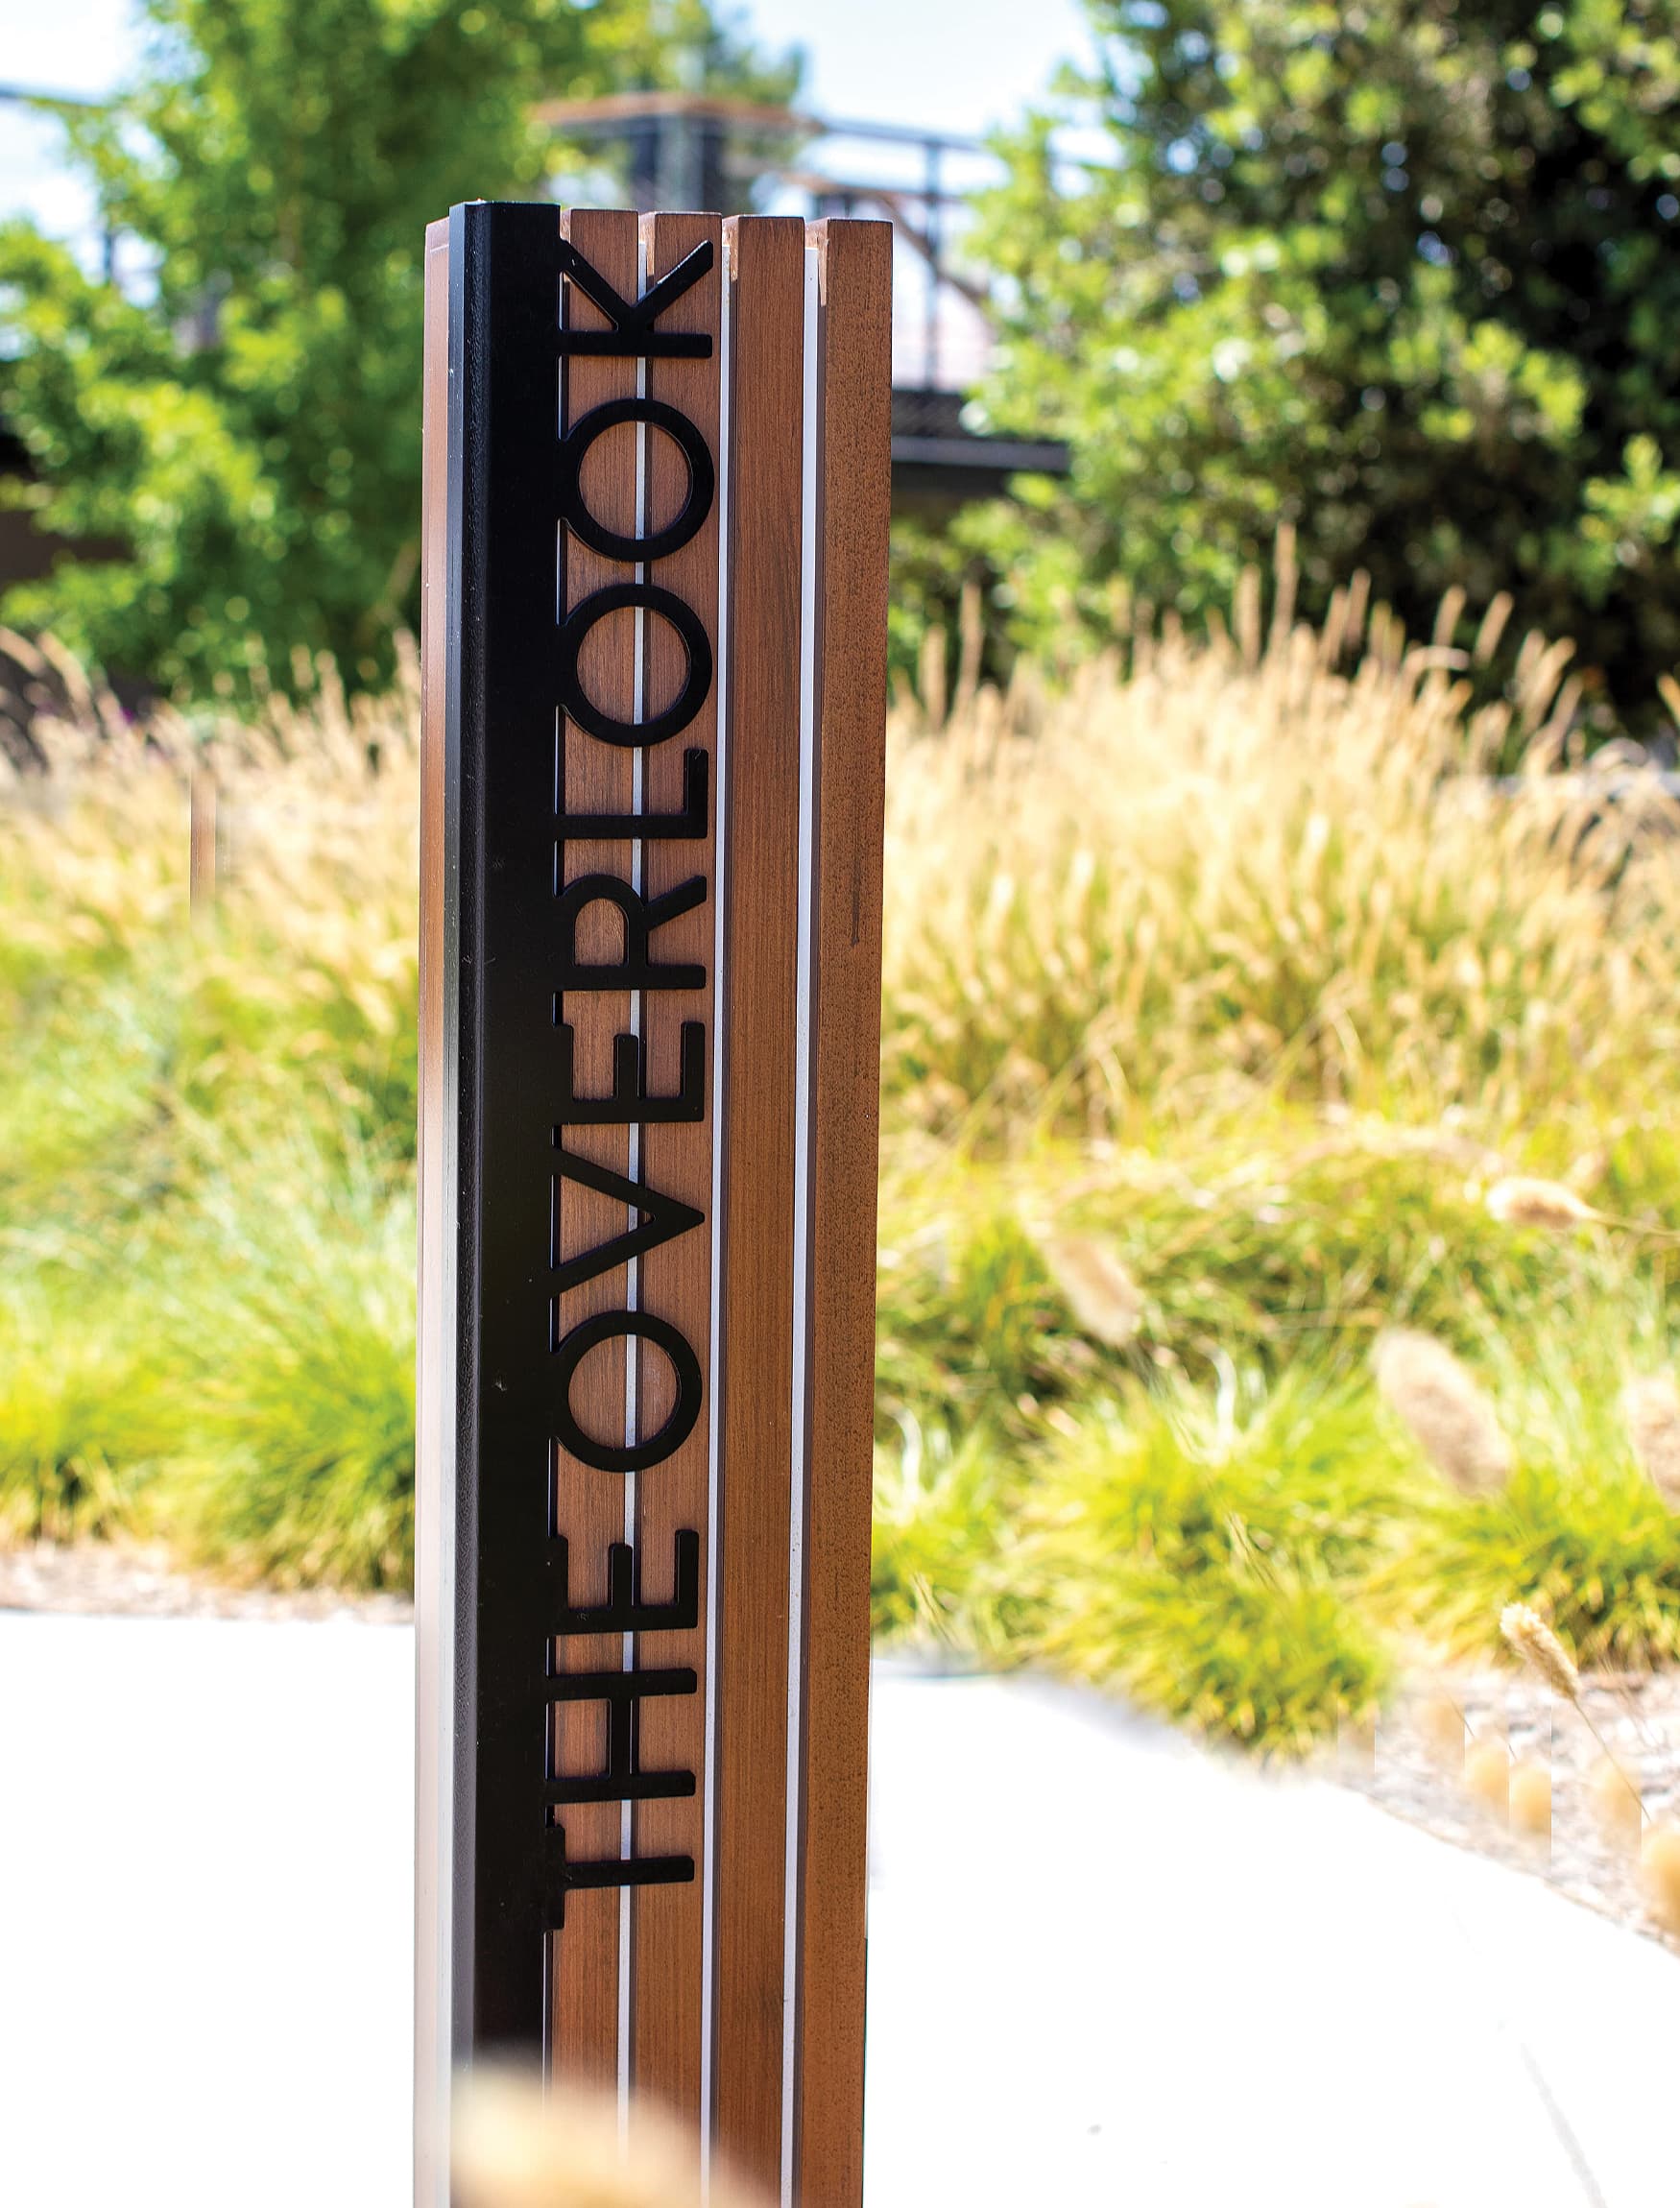 Pedestrian wooden vertical sign for Rise Park in Irvine, California.